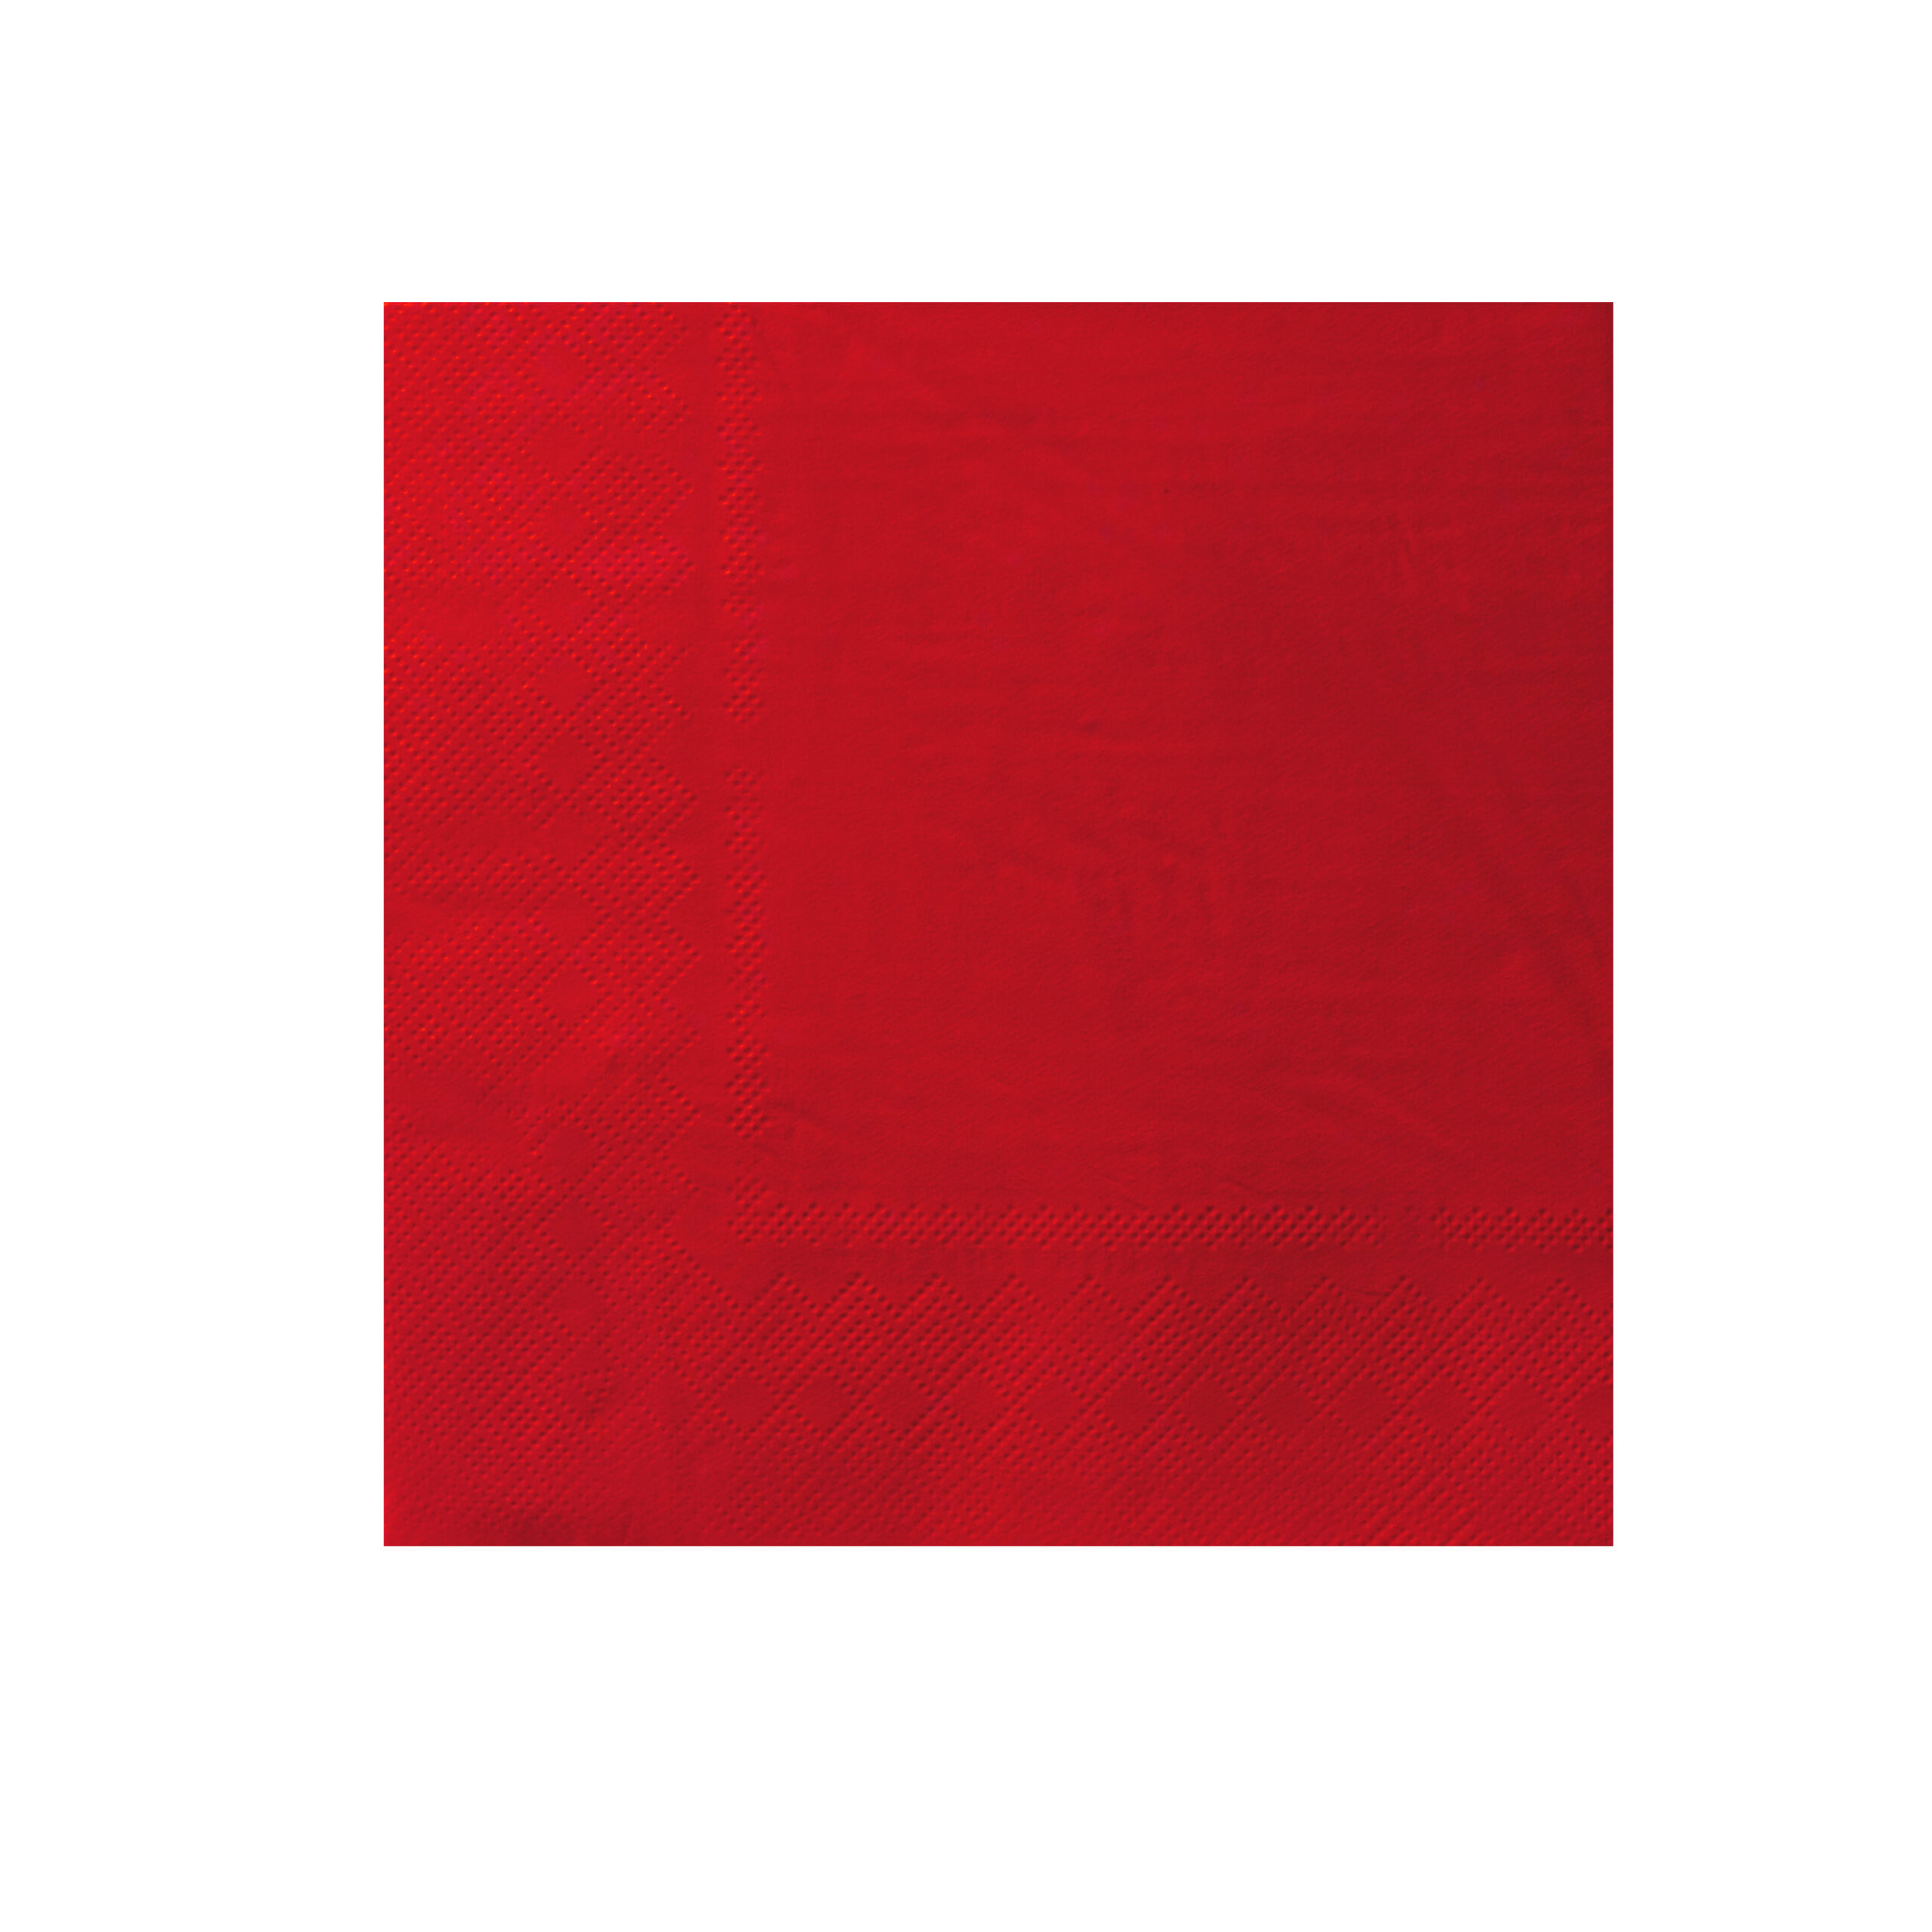 H-SELECT
SERVIETTE
33x33cm 2 PLY RED
(1x50)